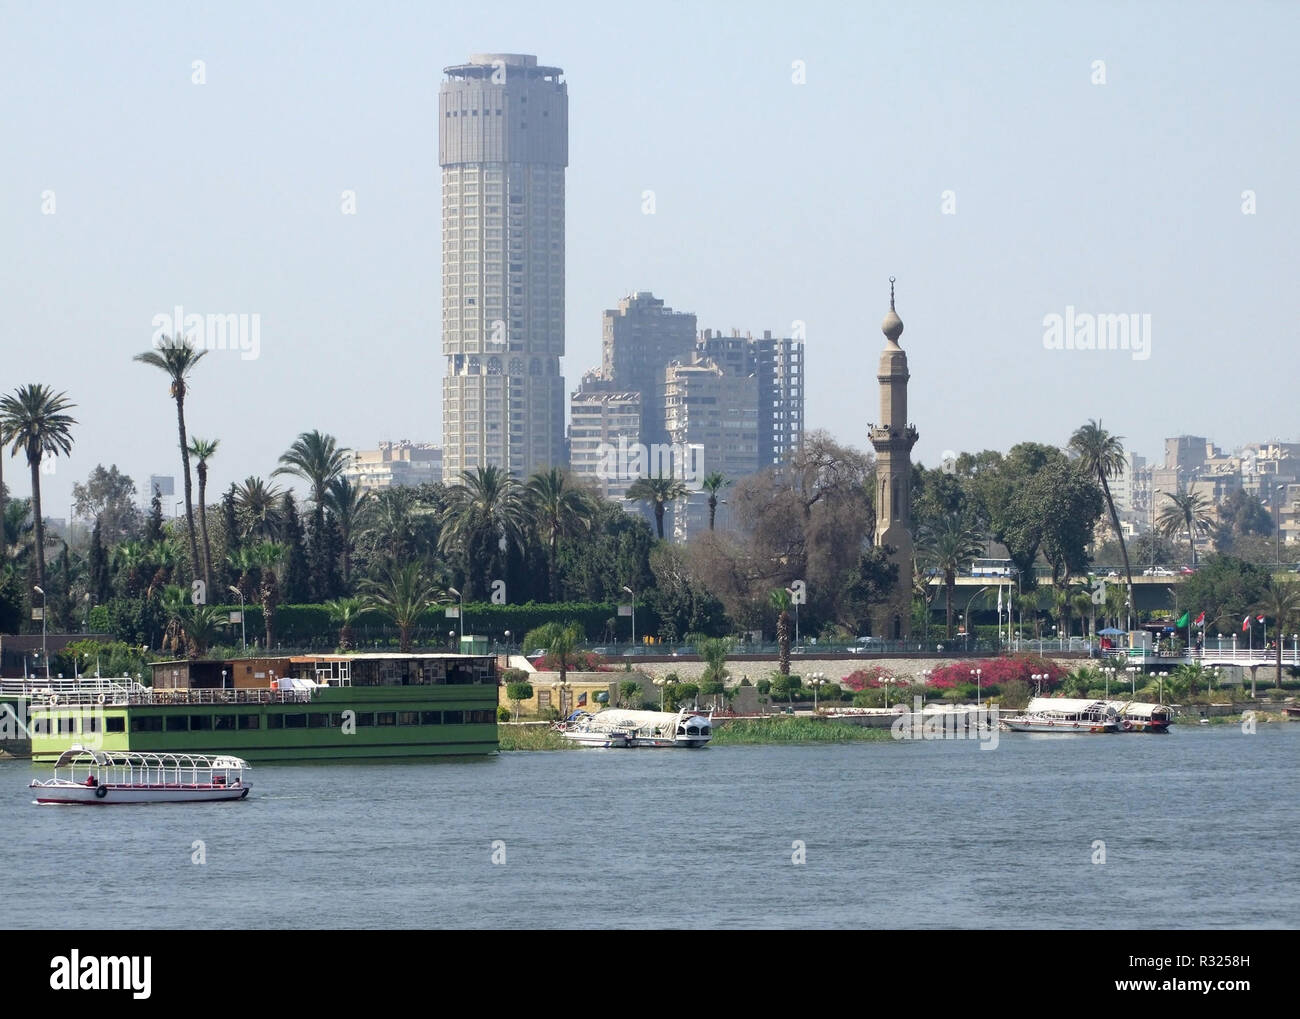 nile scenery in cairo Stock Photo